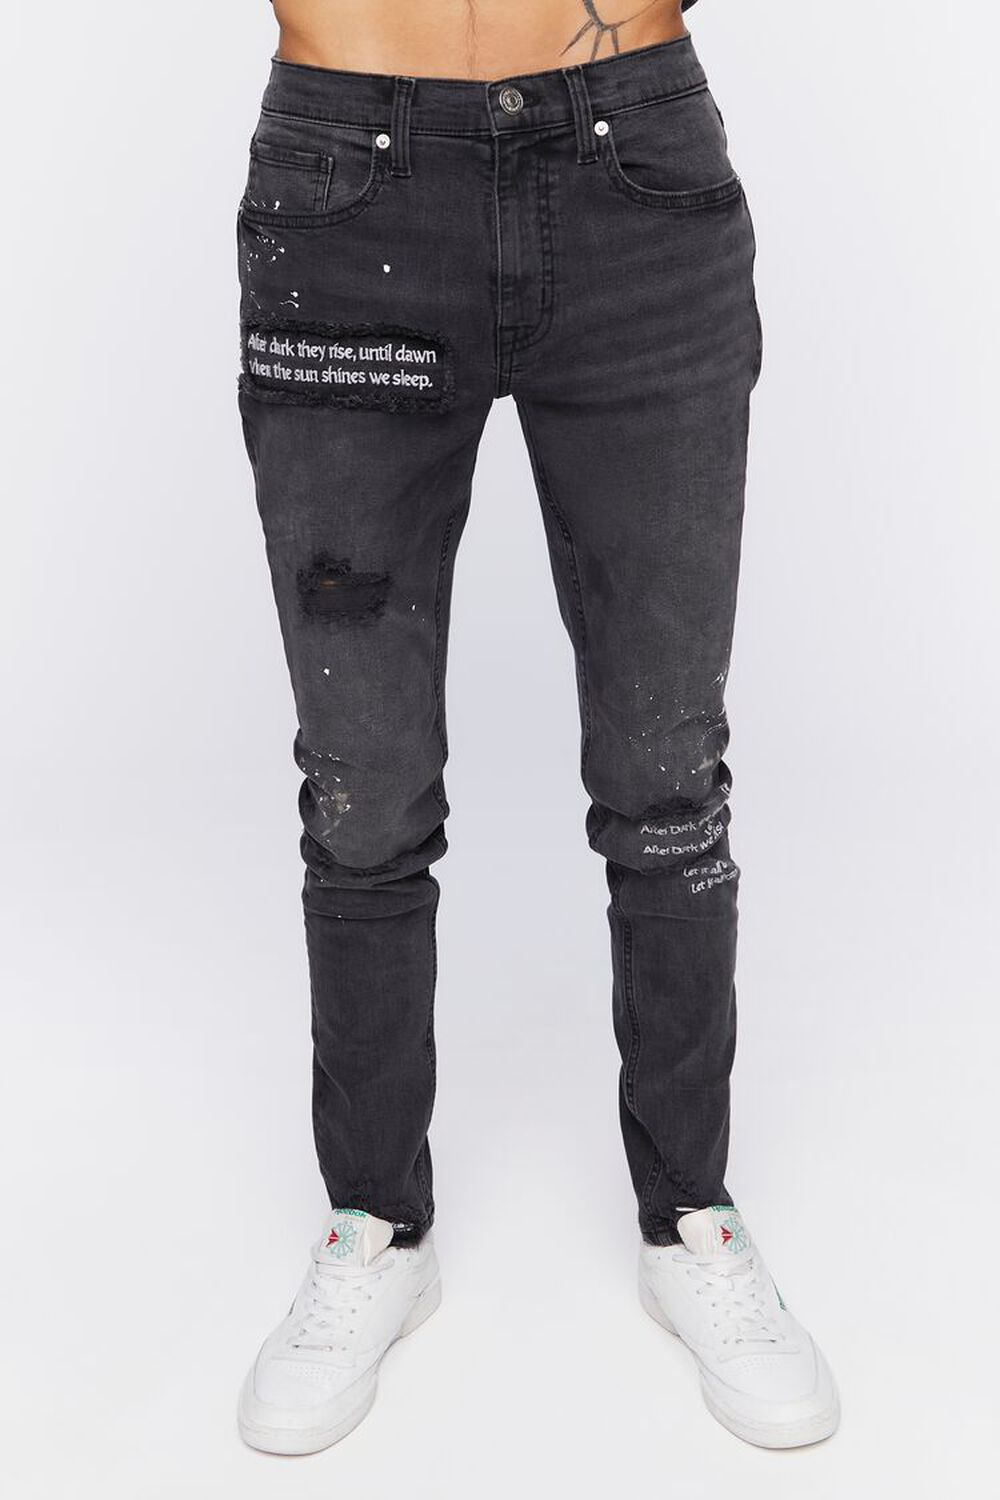 BLACK Graphic Paint Splatter Skinny Jeans, image 2